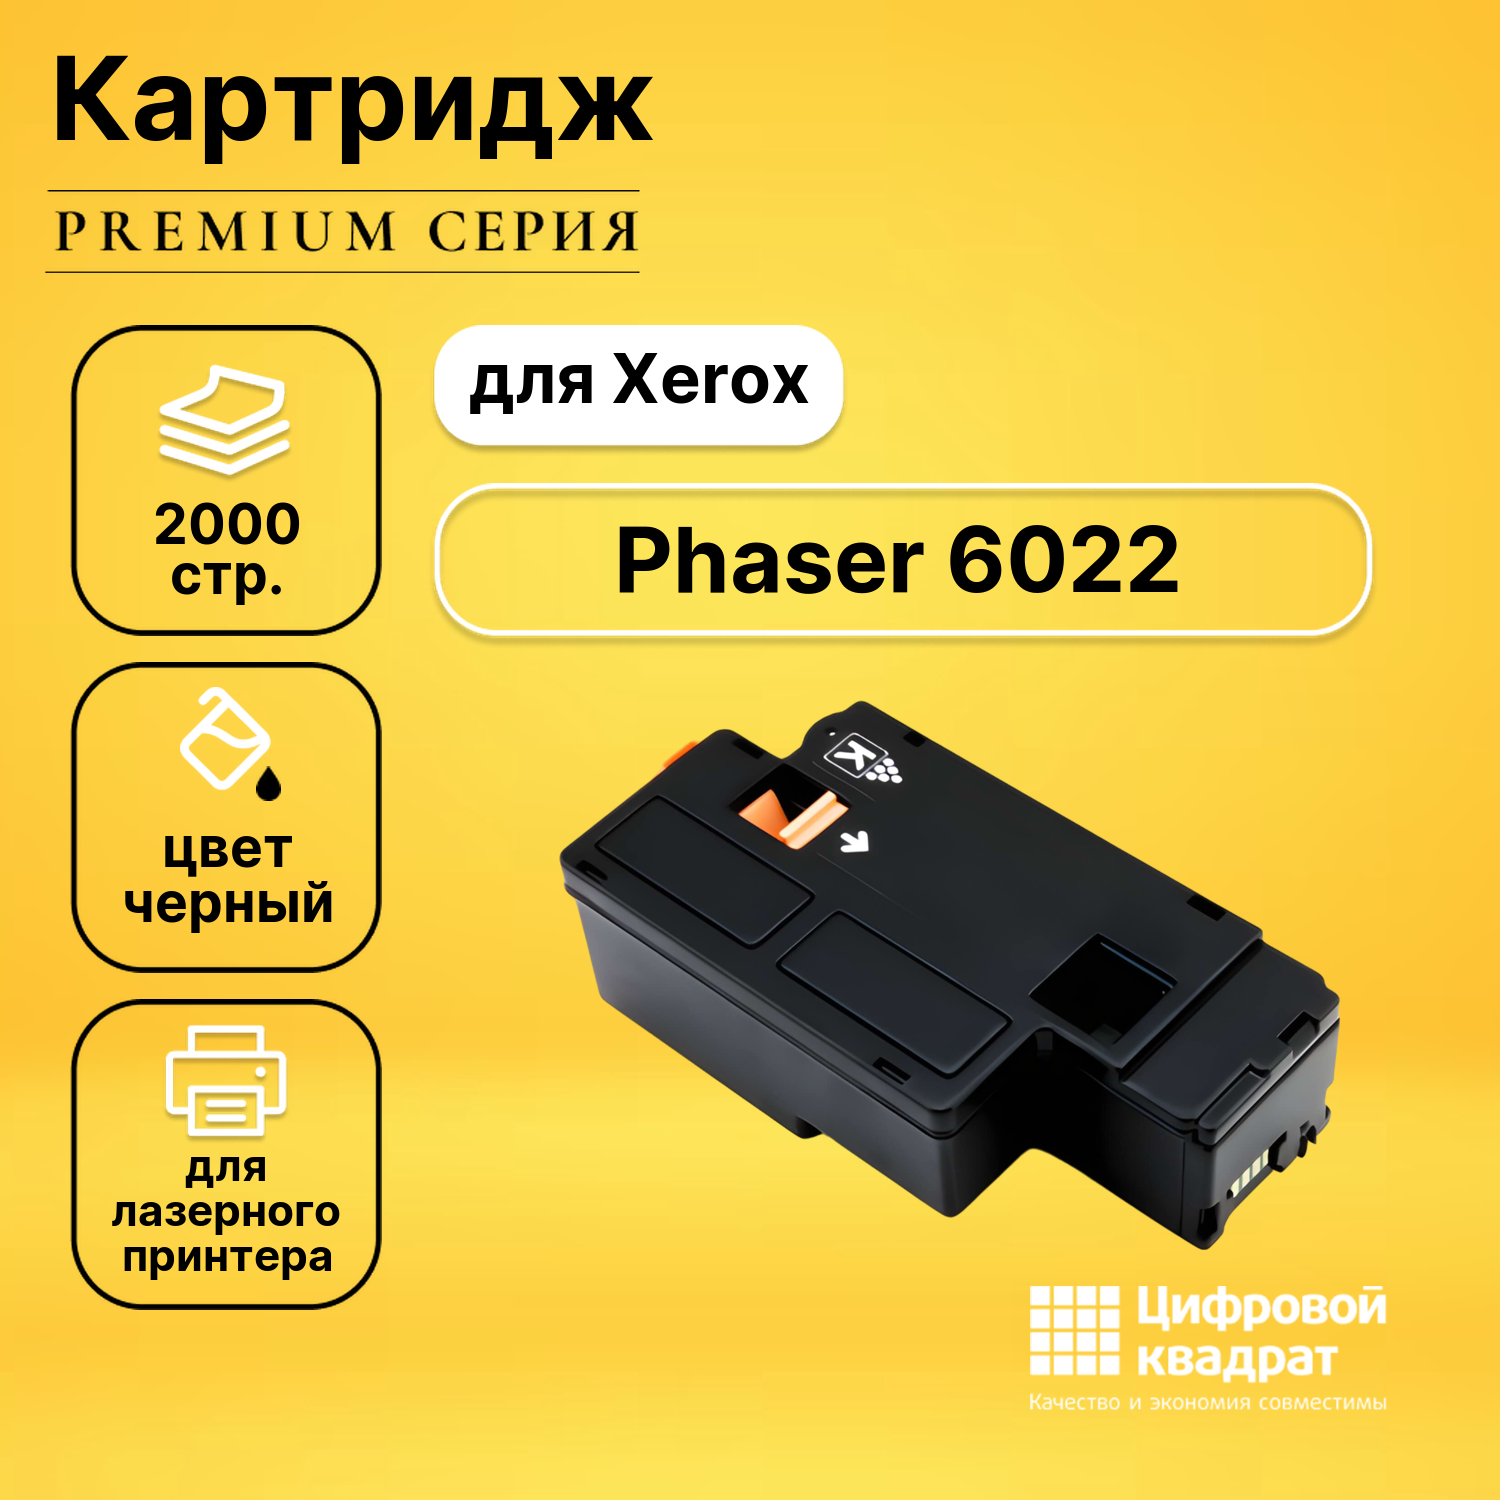 Картридж DS для Xerox Phaser 6022 совместимый